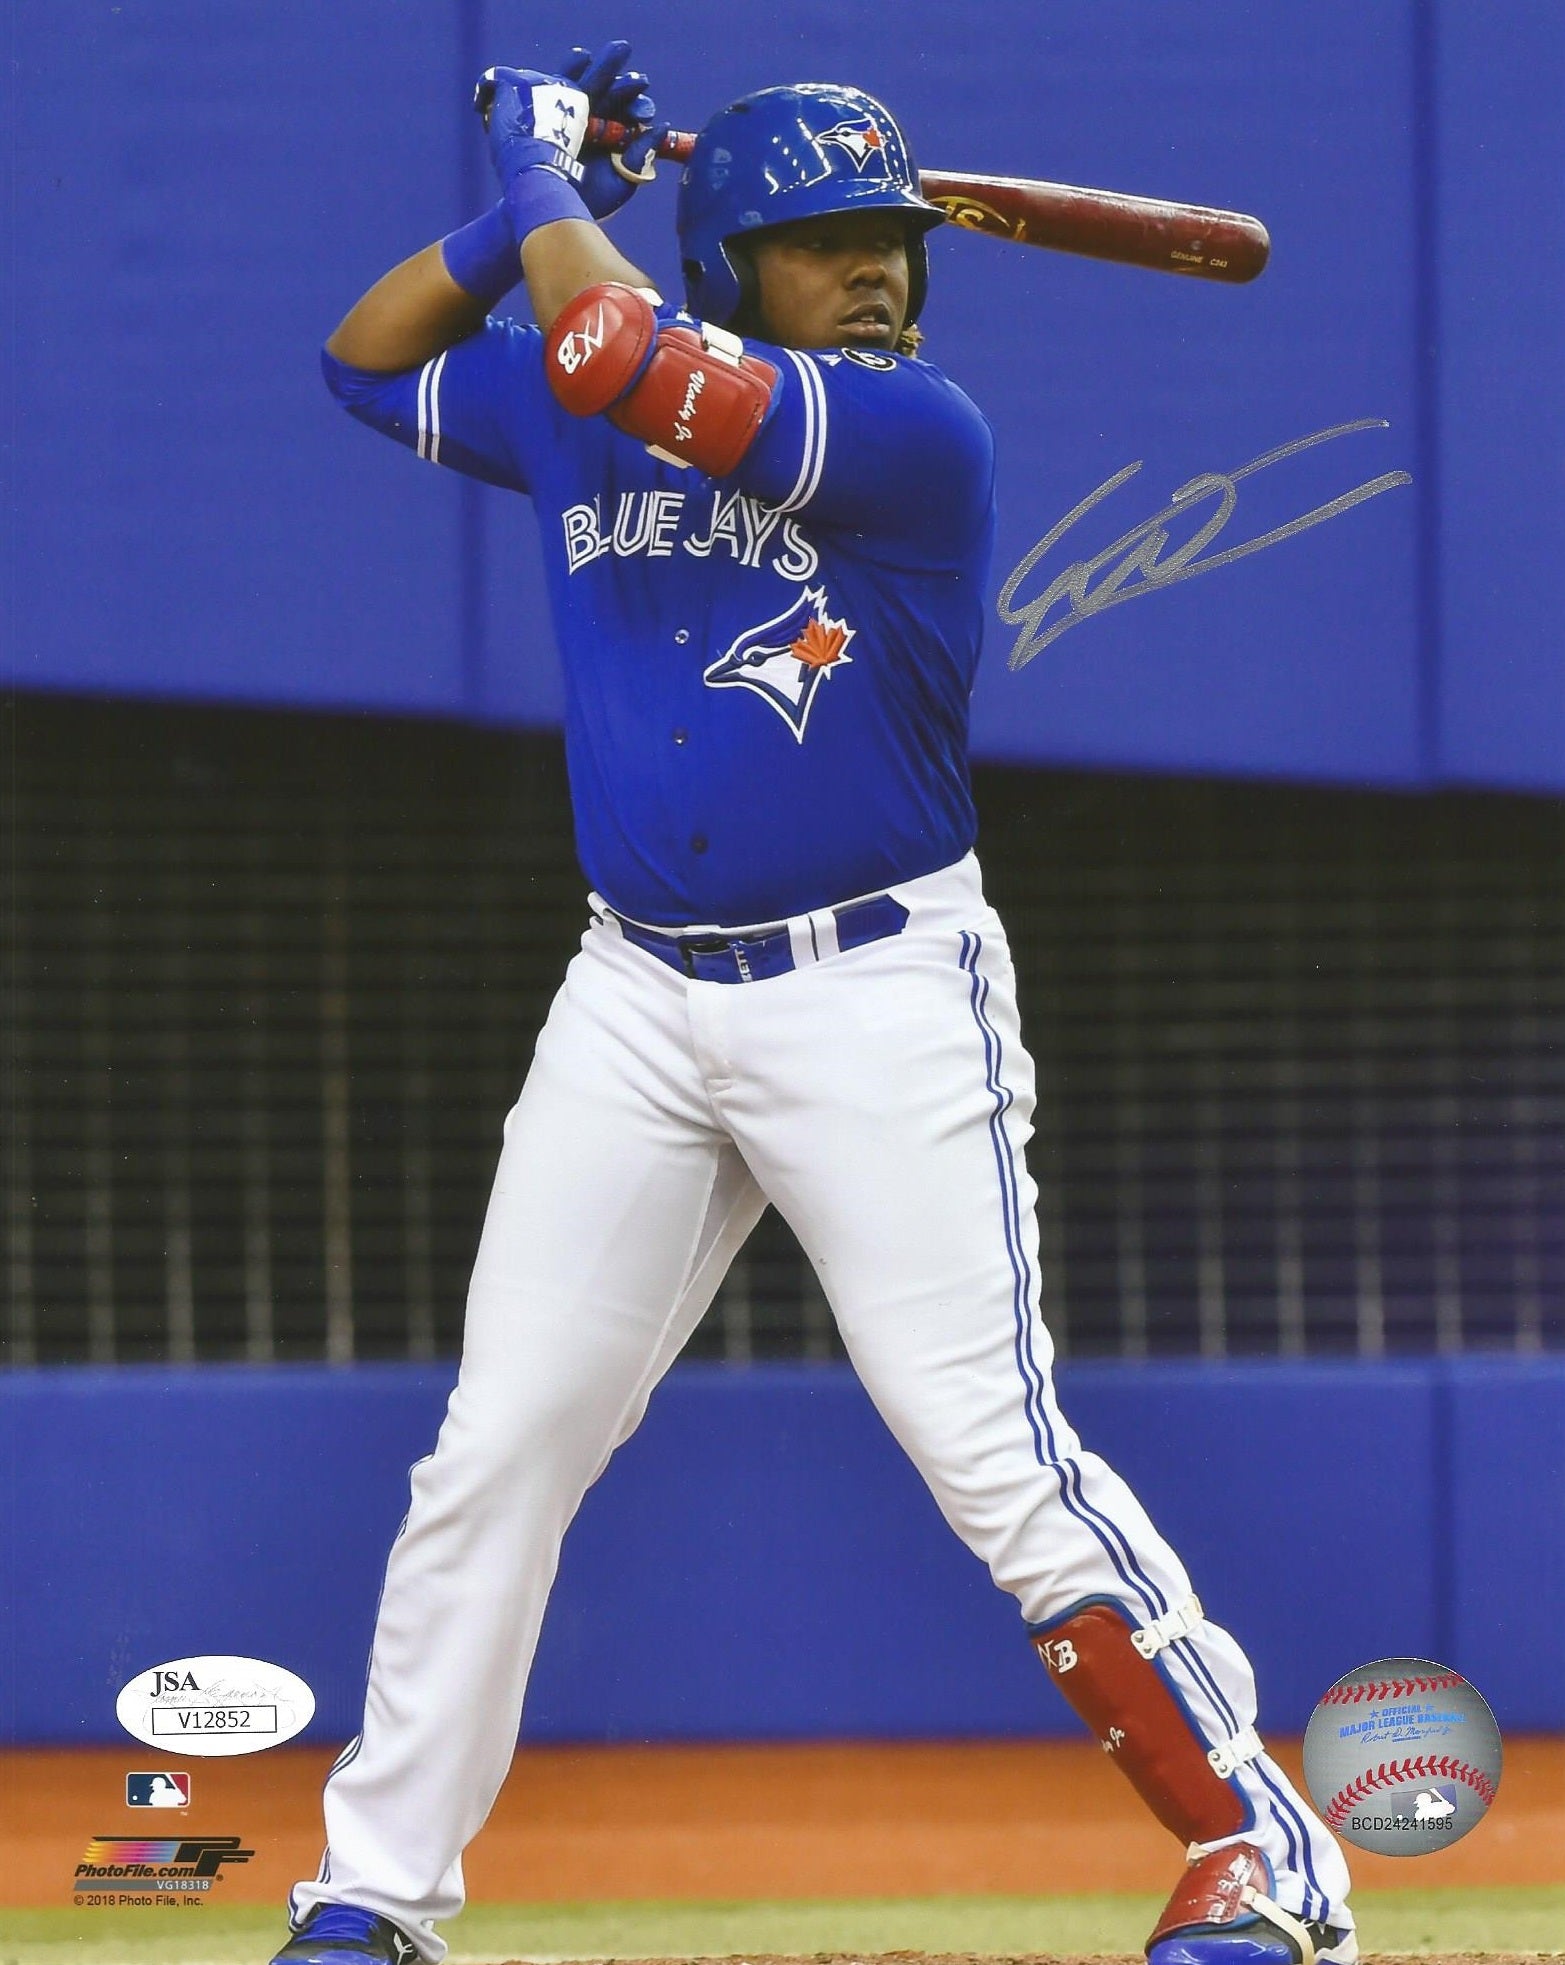 Vladimir Guerrero Jr Autographed Toronto Blue Jays Nike Baseball